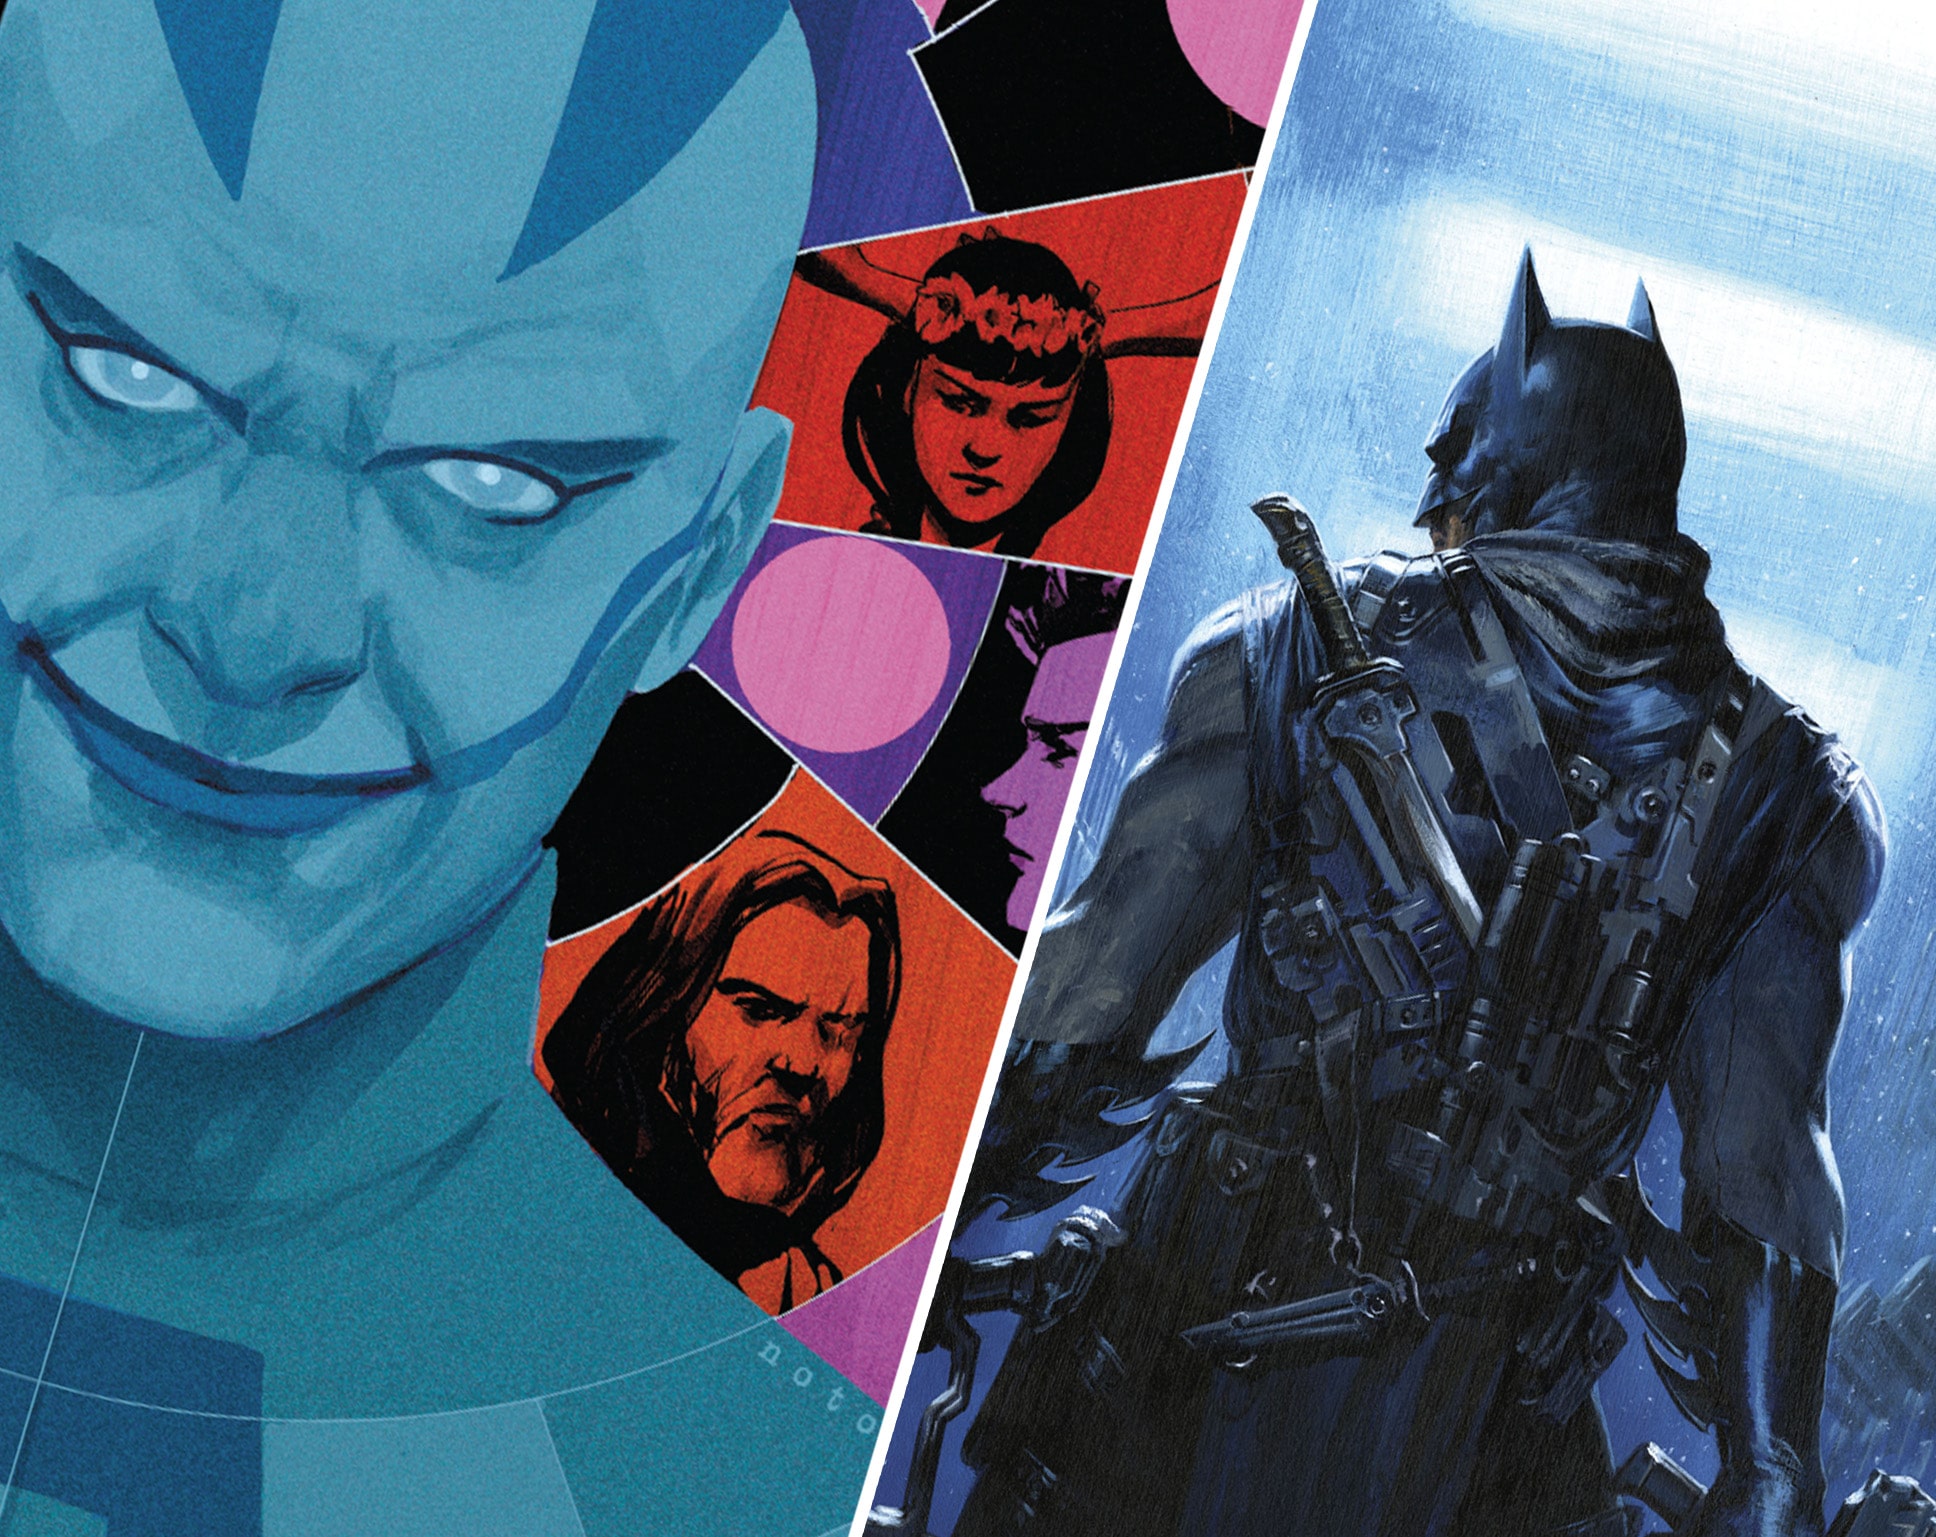 AiPT! Comics Podcast Ep 11: Scott Snyder talks comics projects - plus X-Men Monday news